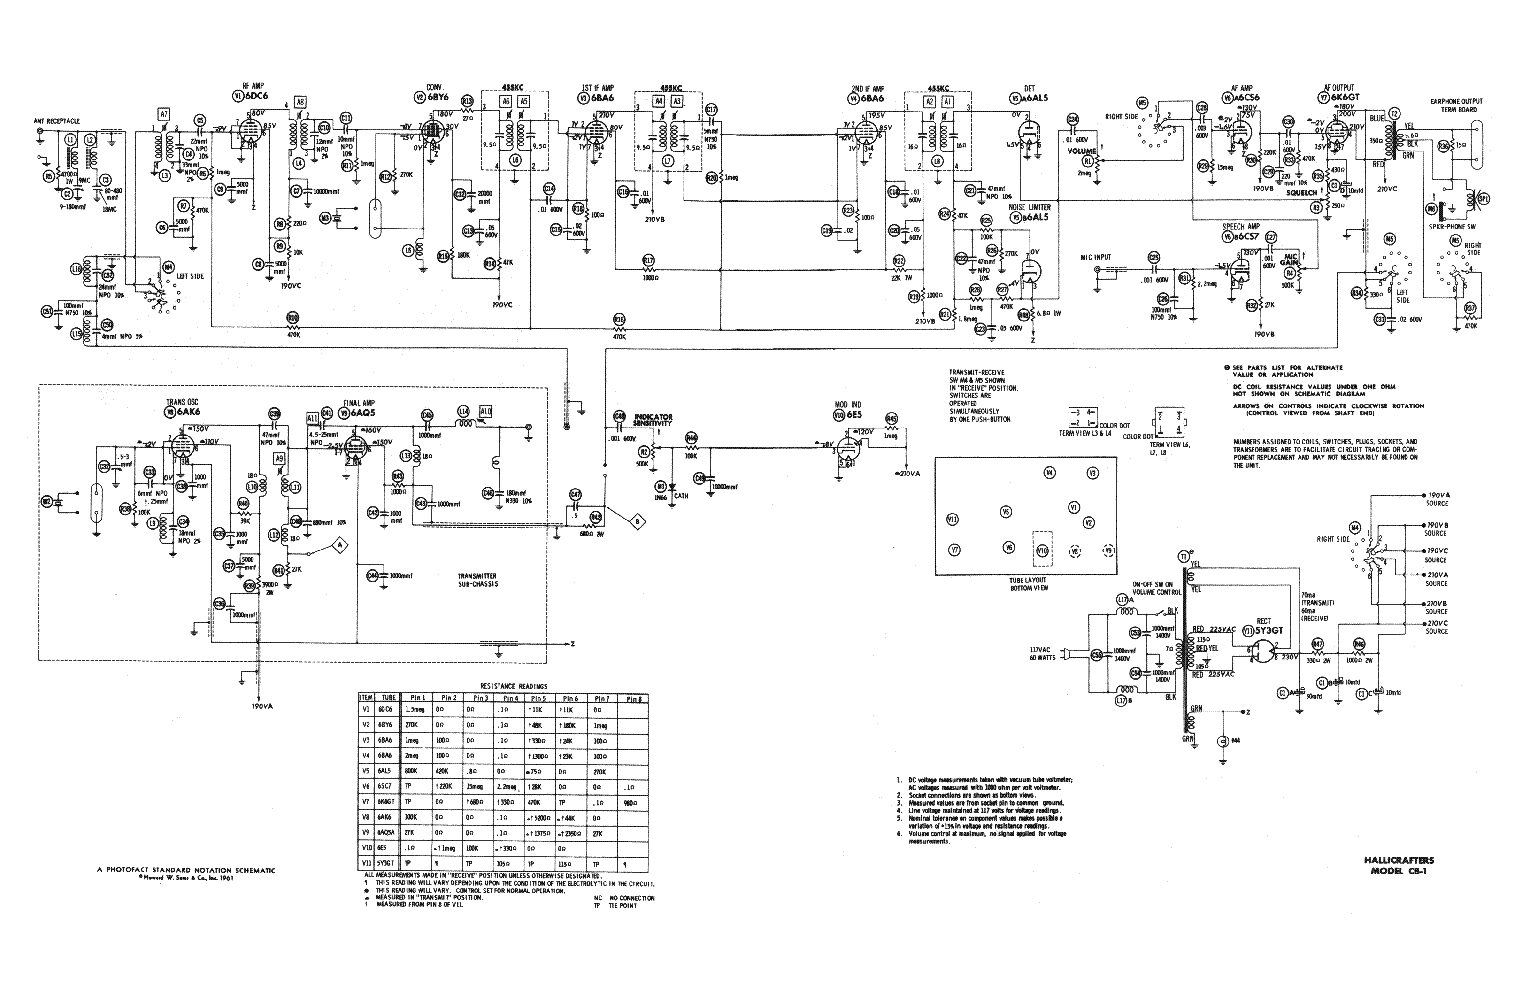 Cb radio schematic